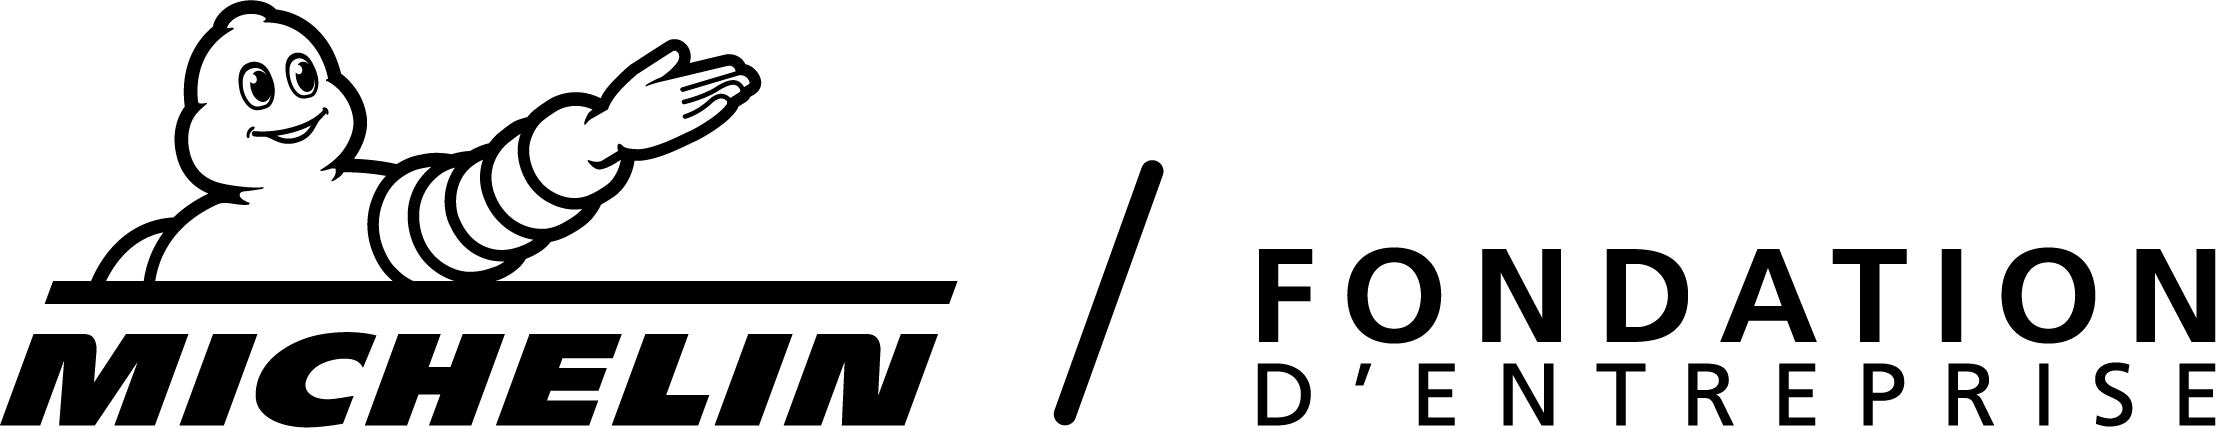 logo-fondation-michelin-horizontal-noir